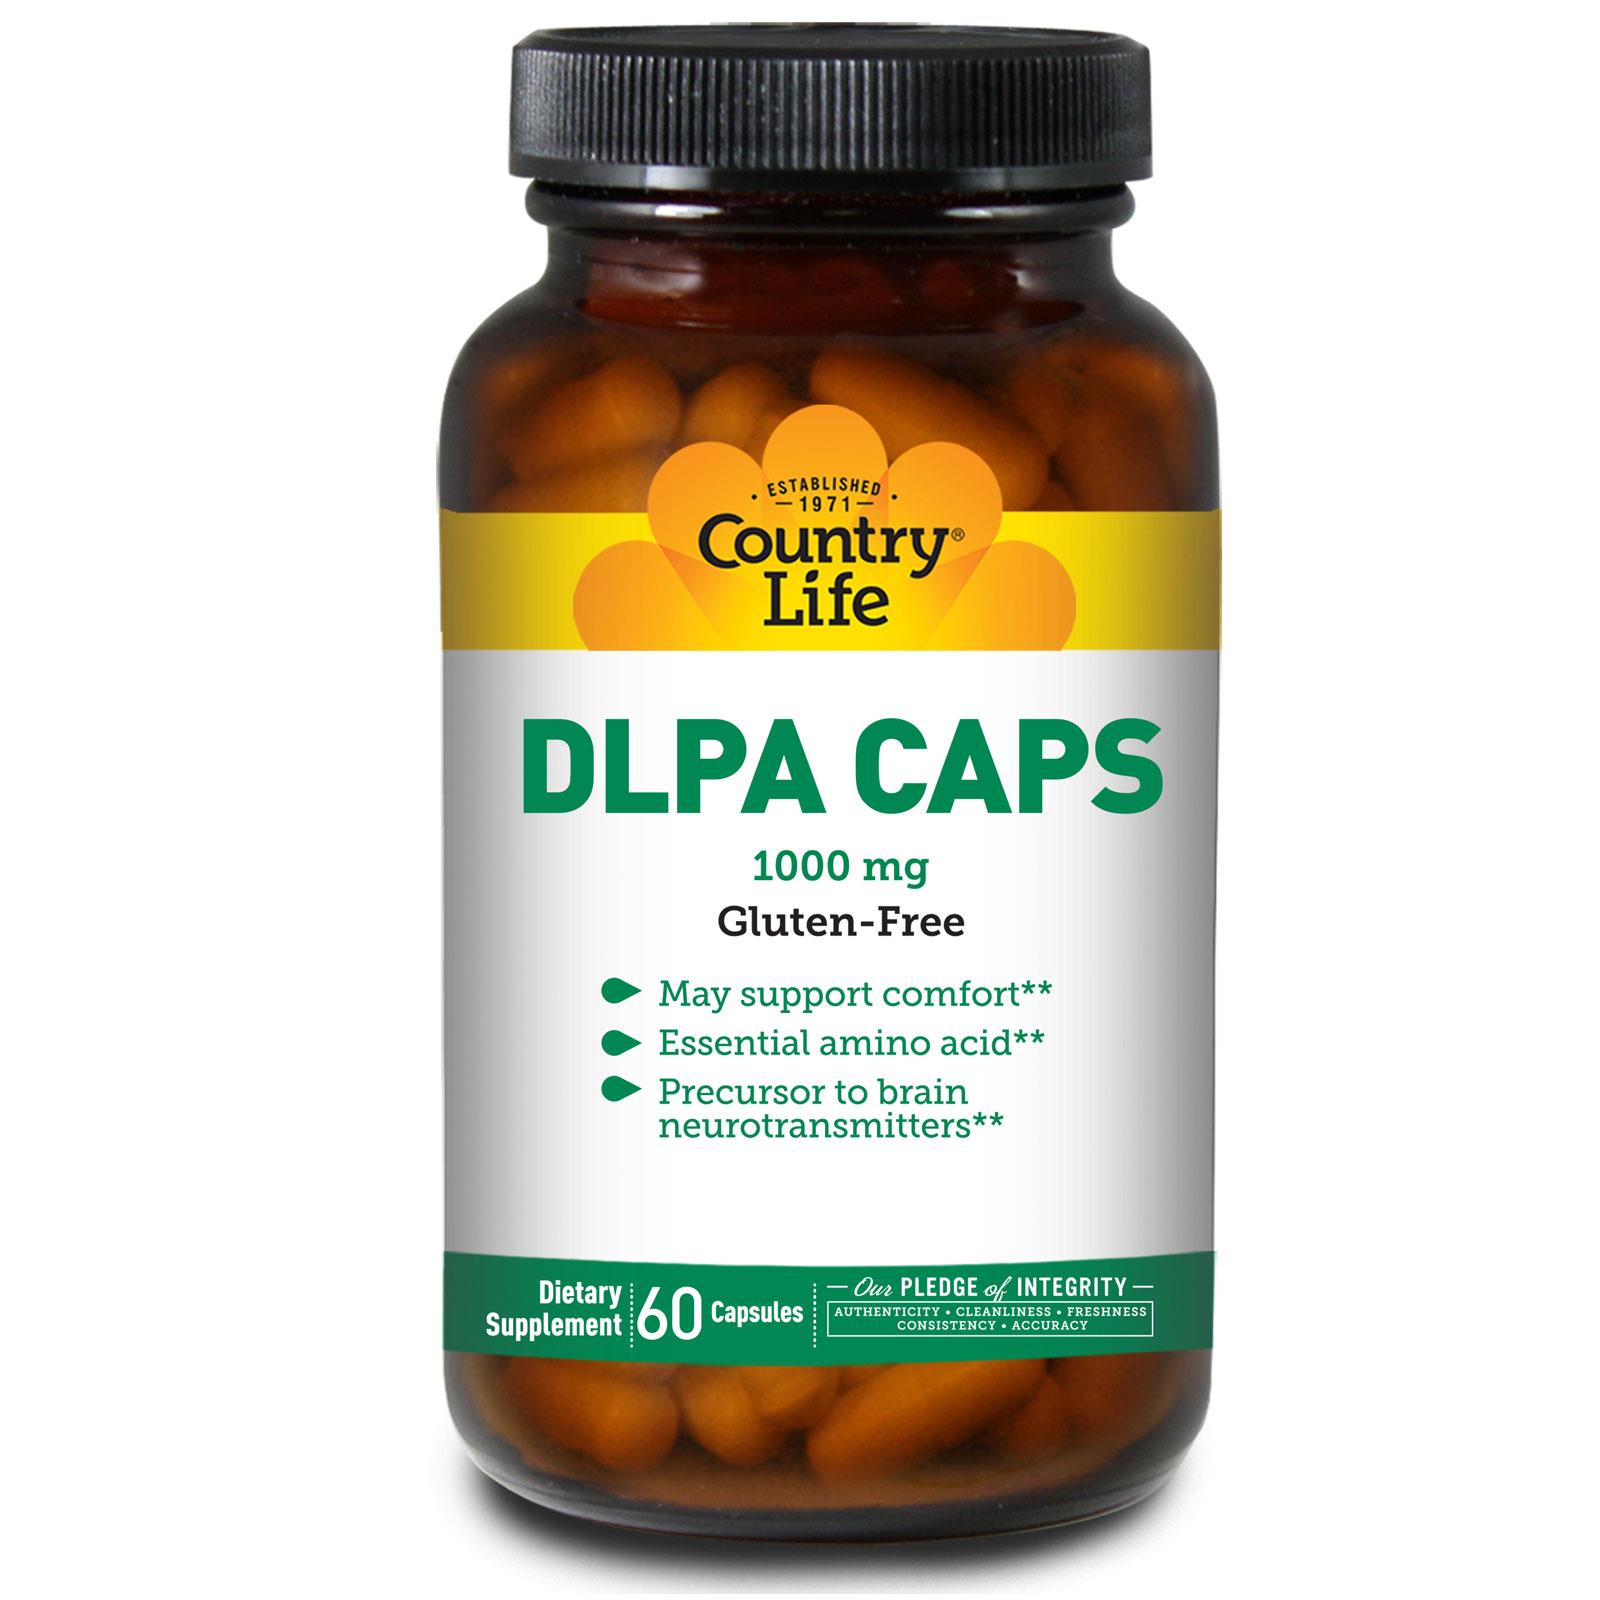 DLPA Caps